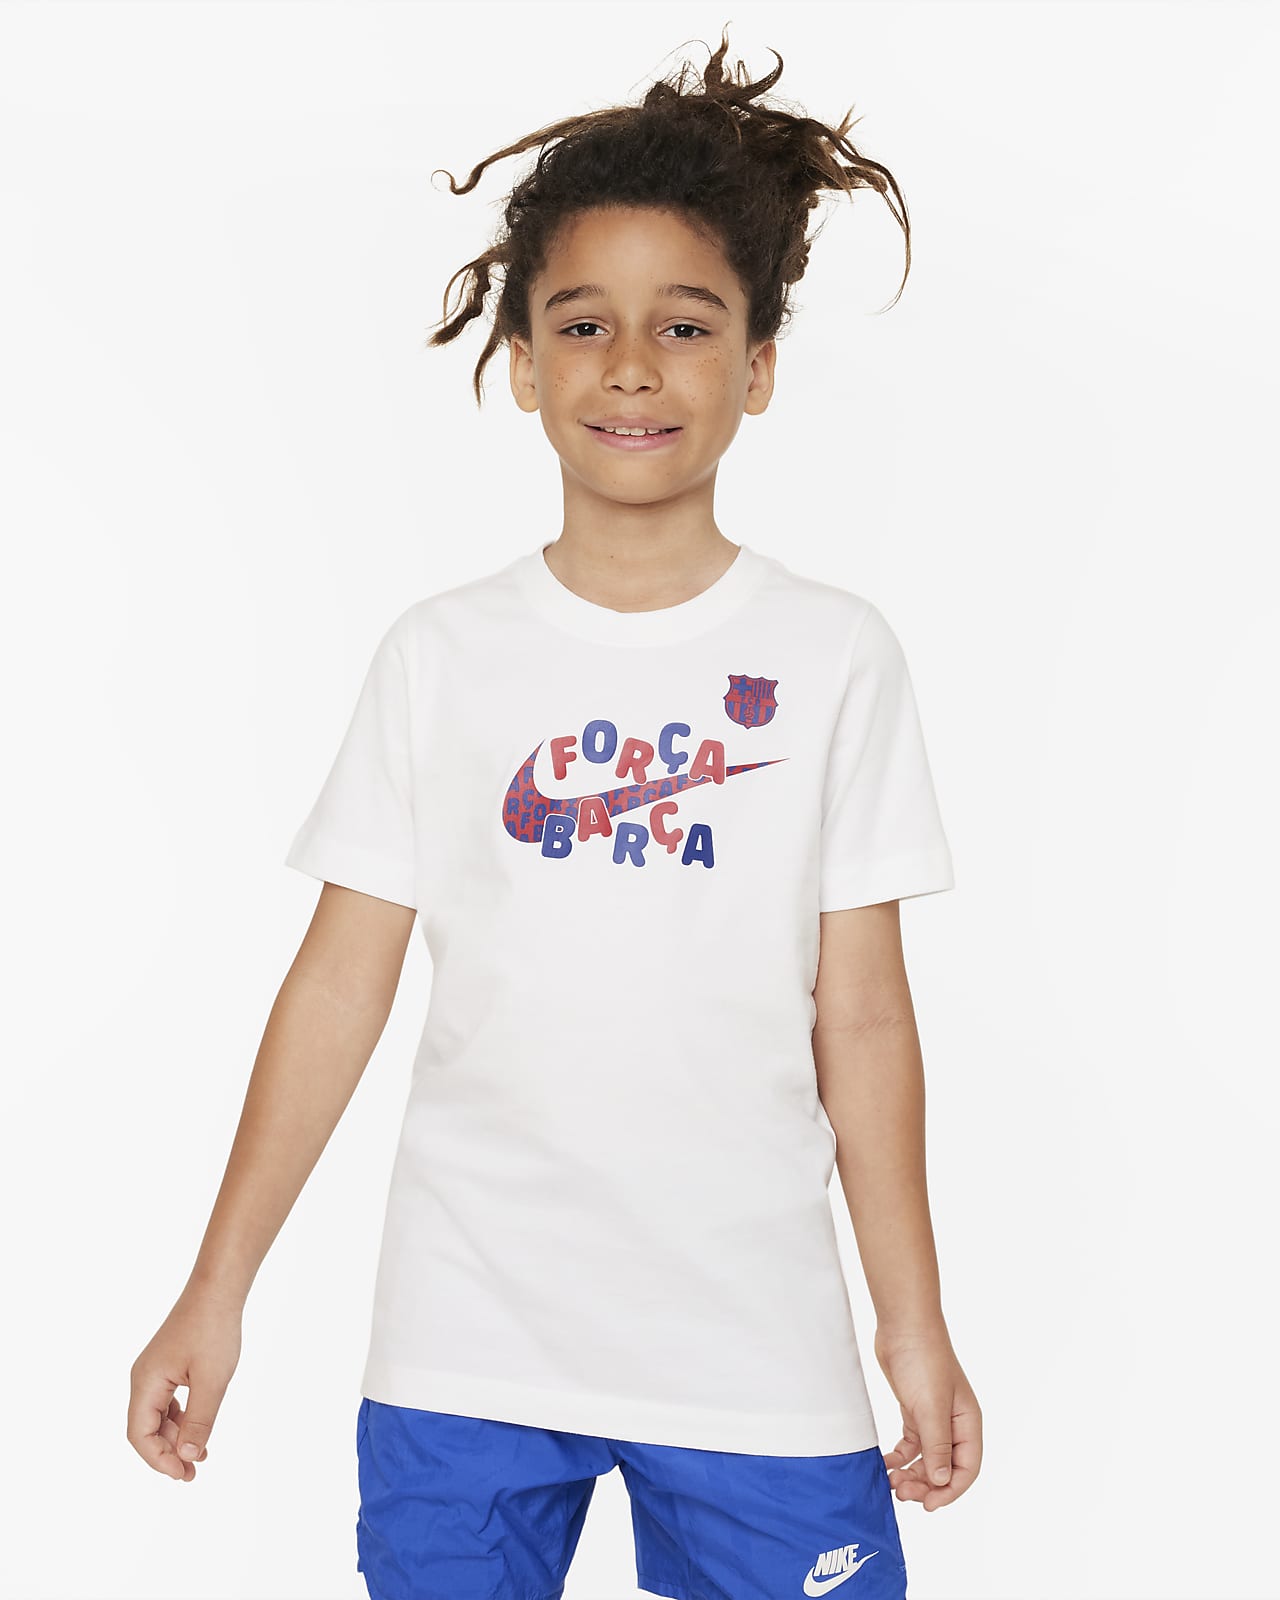 FC Barcelona Mascot Big Kids' Nike Soccer T-Shirt